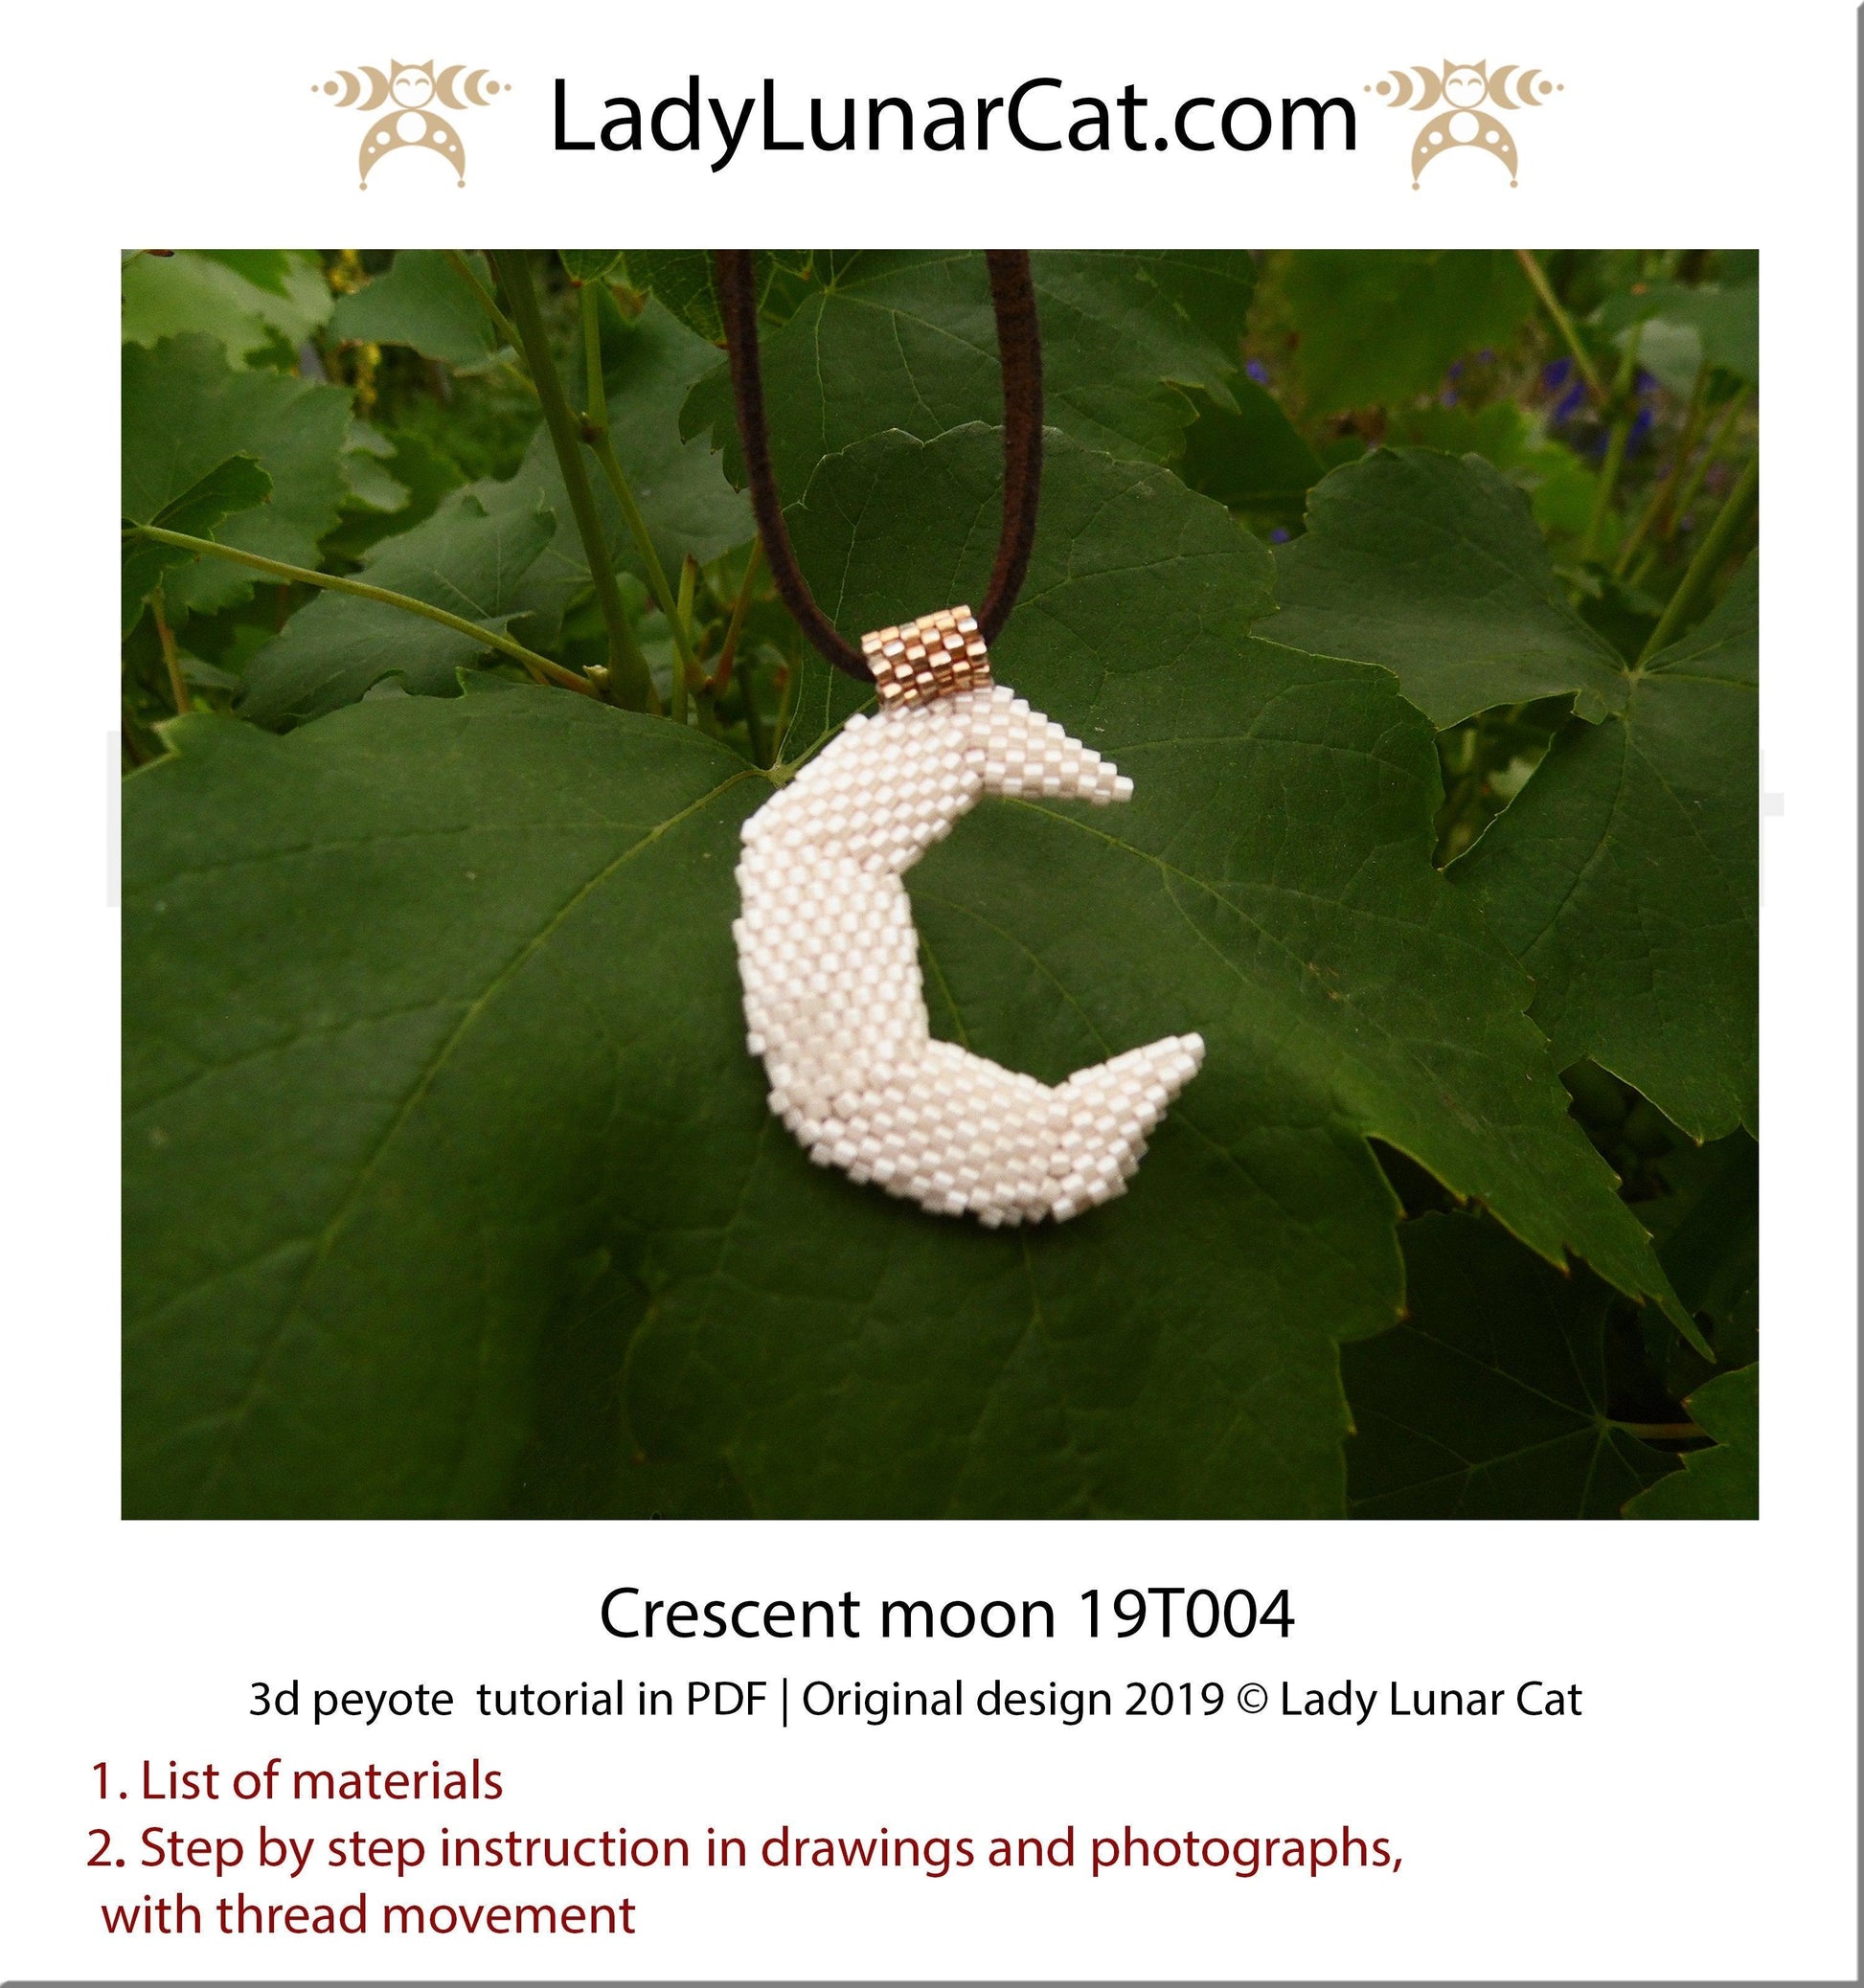 Beading tutorial for 3d peyote stitch Crescent moon celestial 19T004 LadyLunarCat